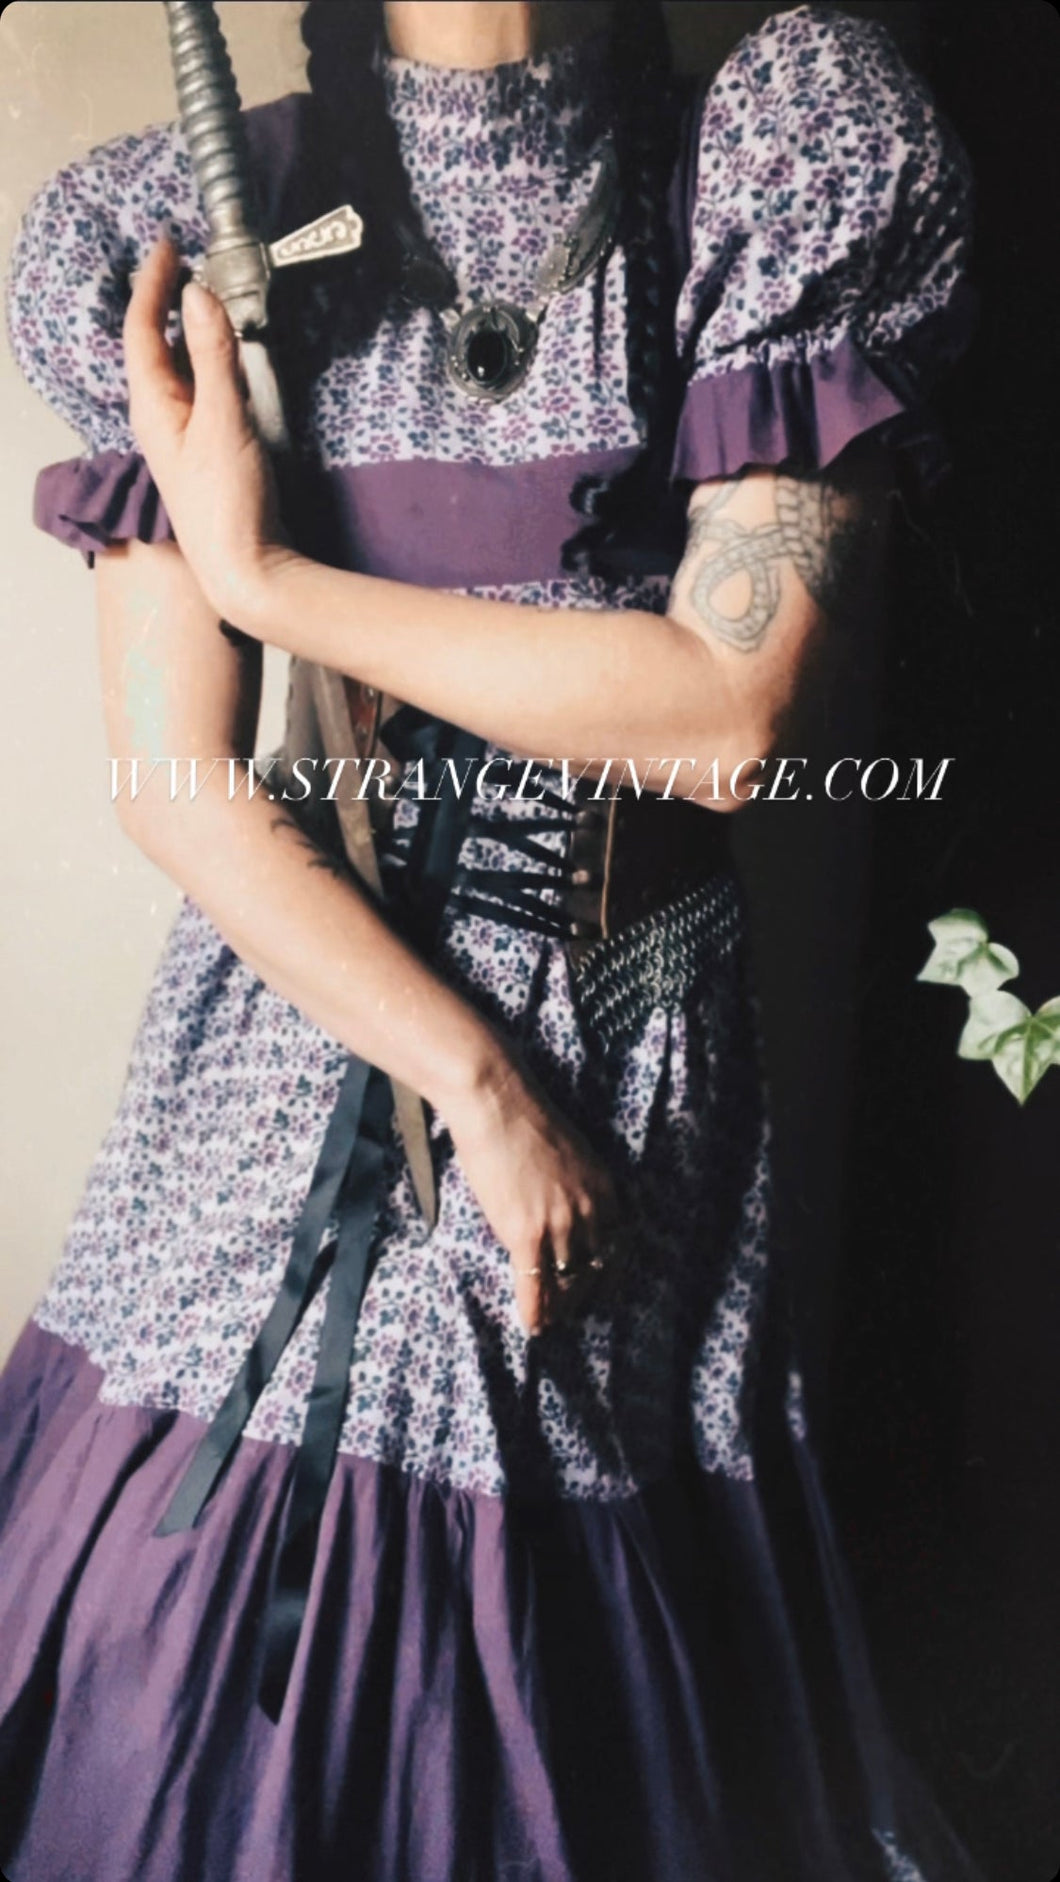 Regal purple 1960’s vintage dress by Laura Ashley